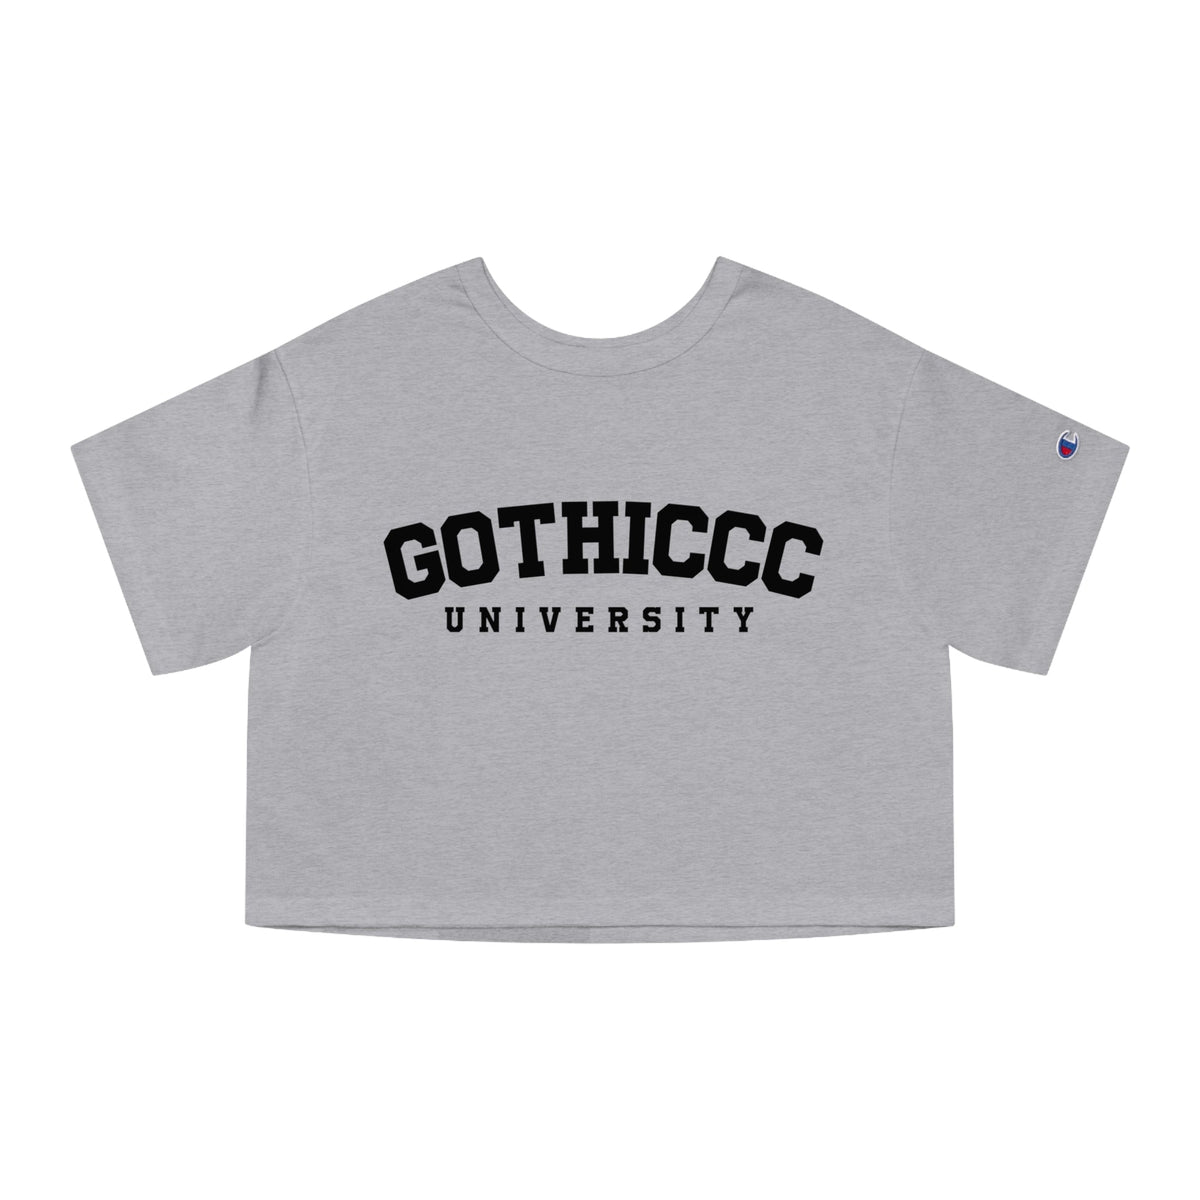 Gothiccc University Heavyweight Cropped T-Shirt - Goth Cloth Co.T-Shirt89276672634053747965